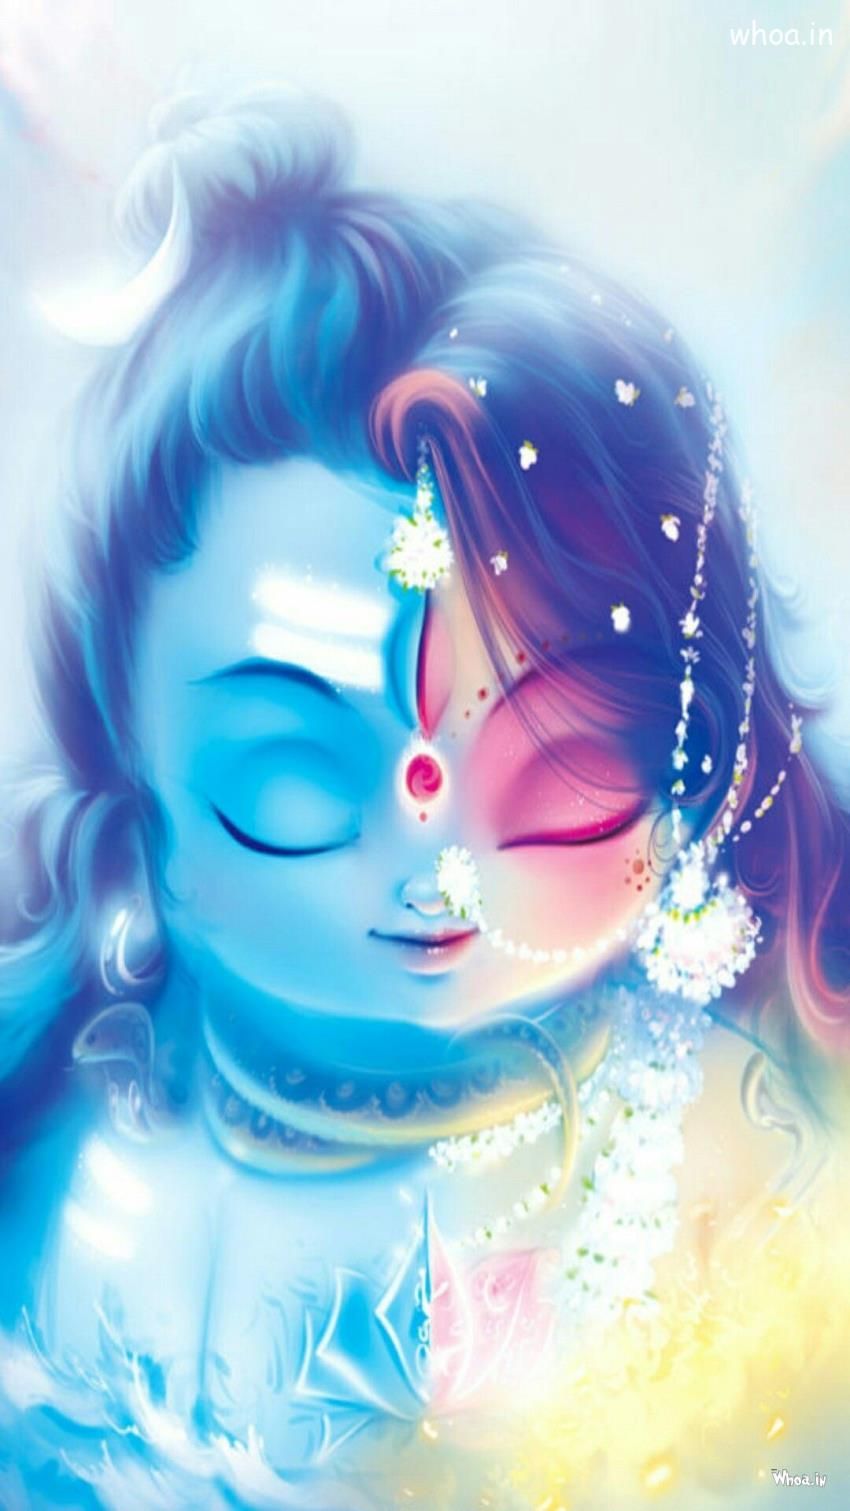 The Wonderful And Colorful Art Image Of Lord Shiva And Uma. Lord shiva painting, Shiva parvati image, Lord shiva HD wallpaper